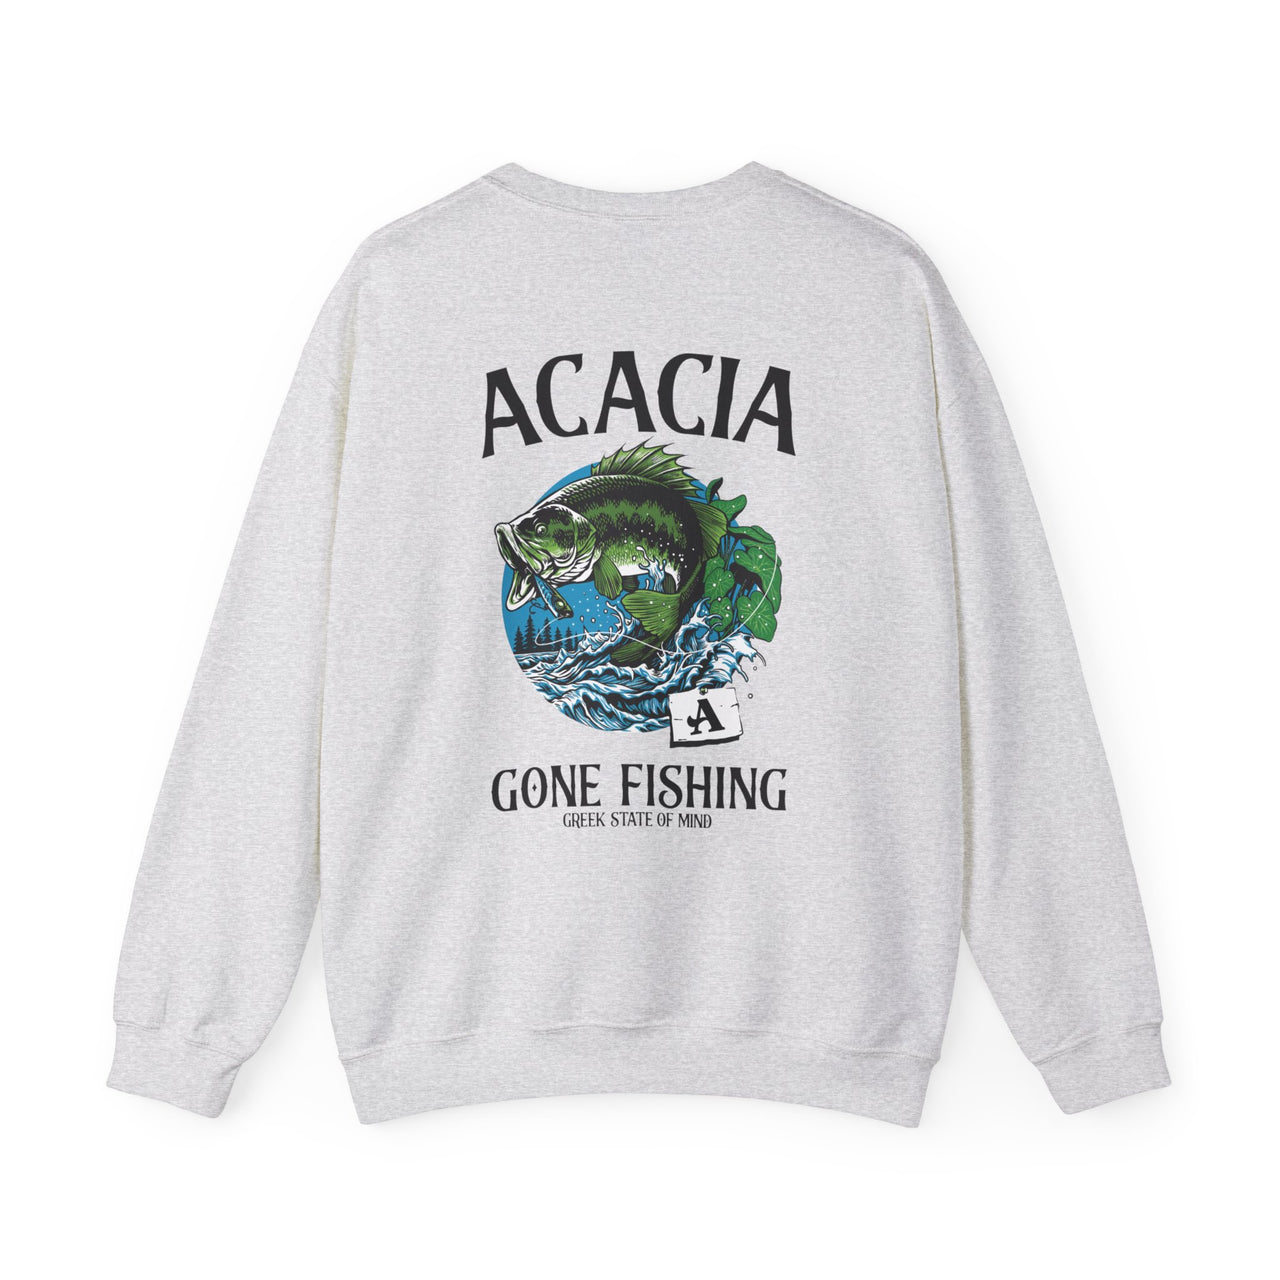 Acacia Graphic Crewneck Sweatshirt | Gone Fishing